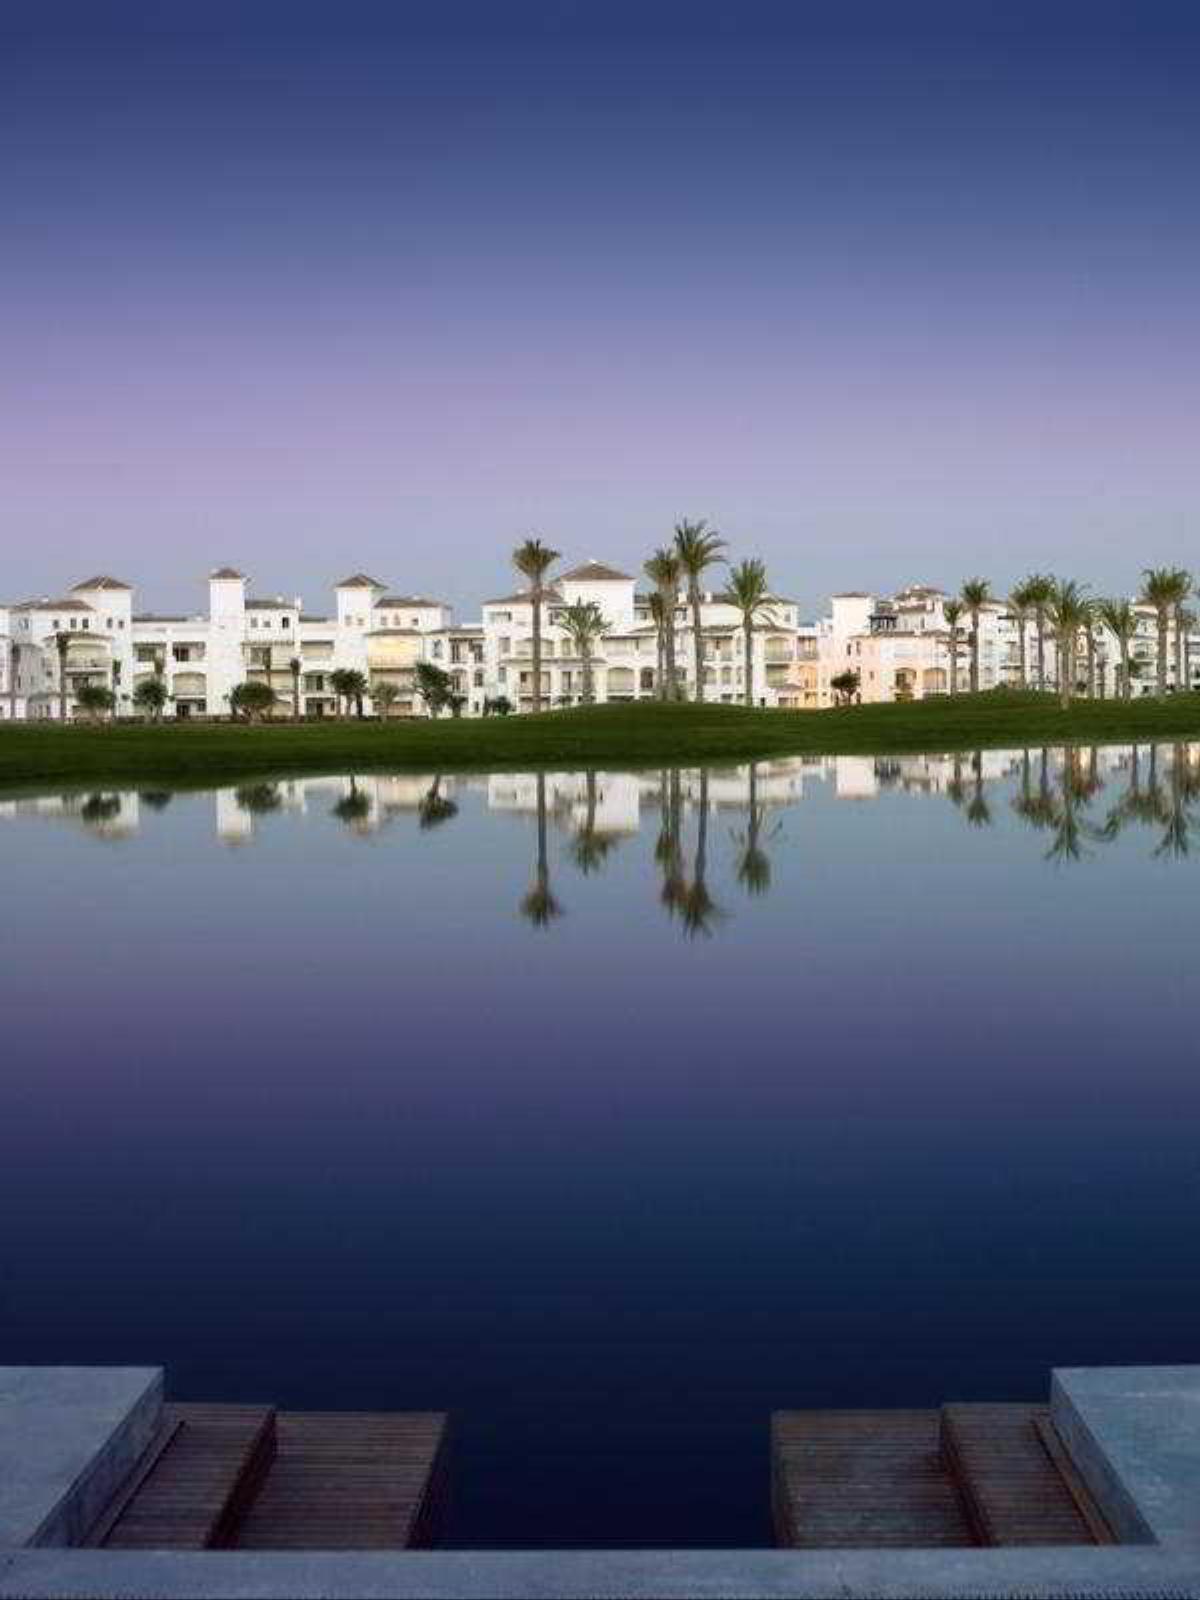 Polaris World La Torre Golf Resort Hotel La Manga - Costa Calida Spain